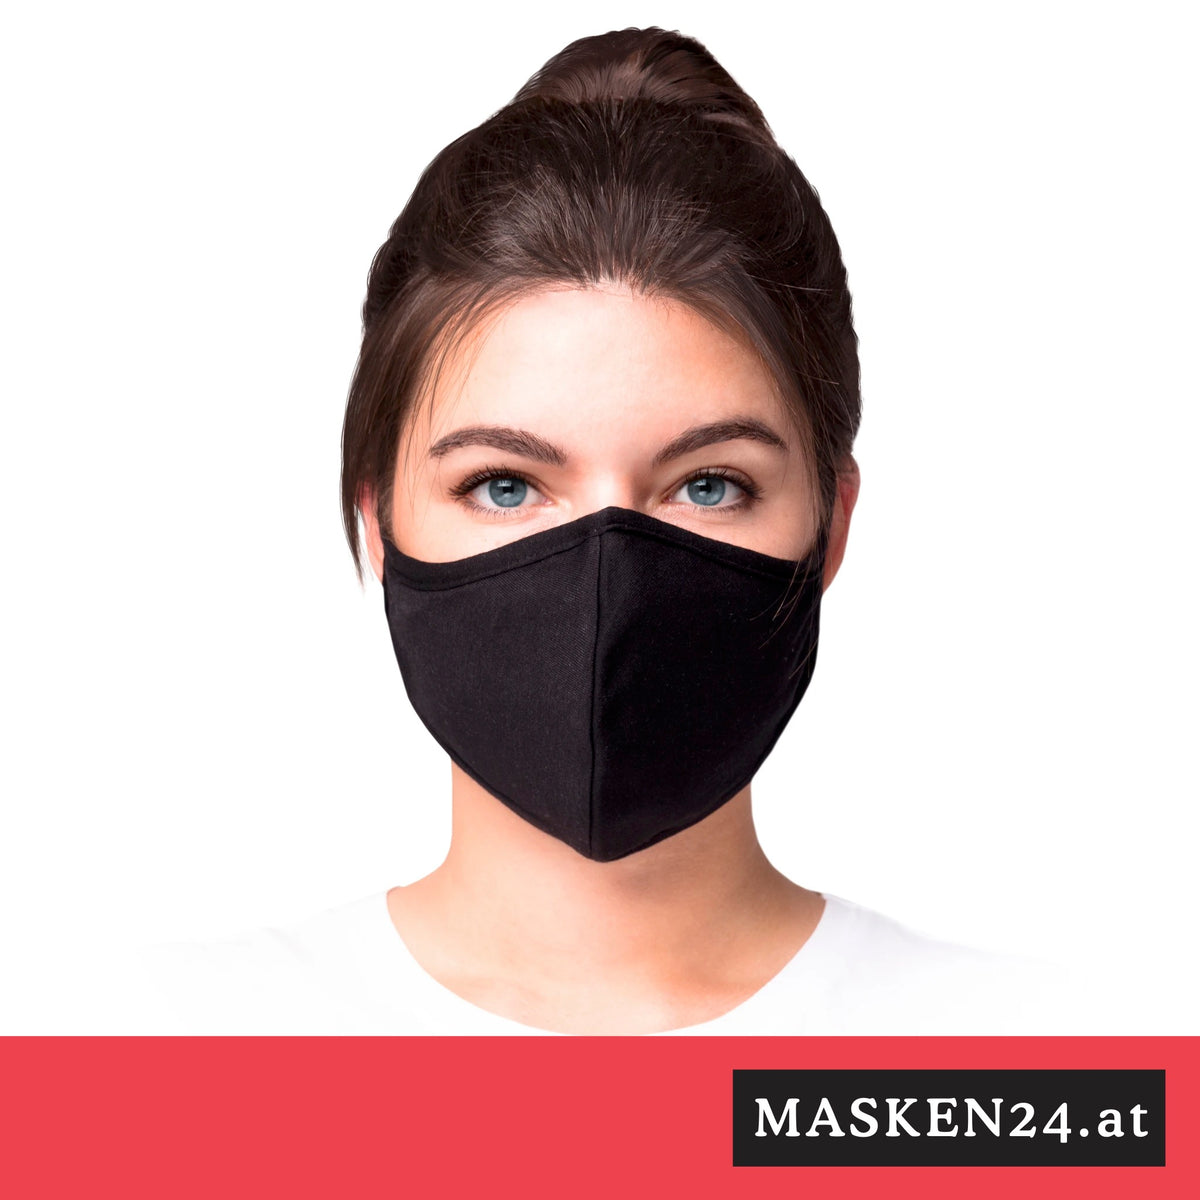 (c) Masken24.at